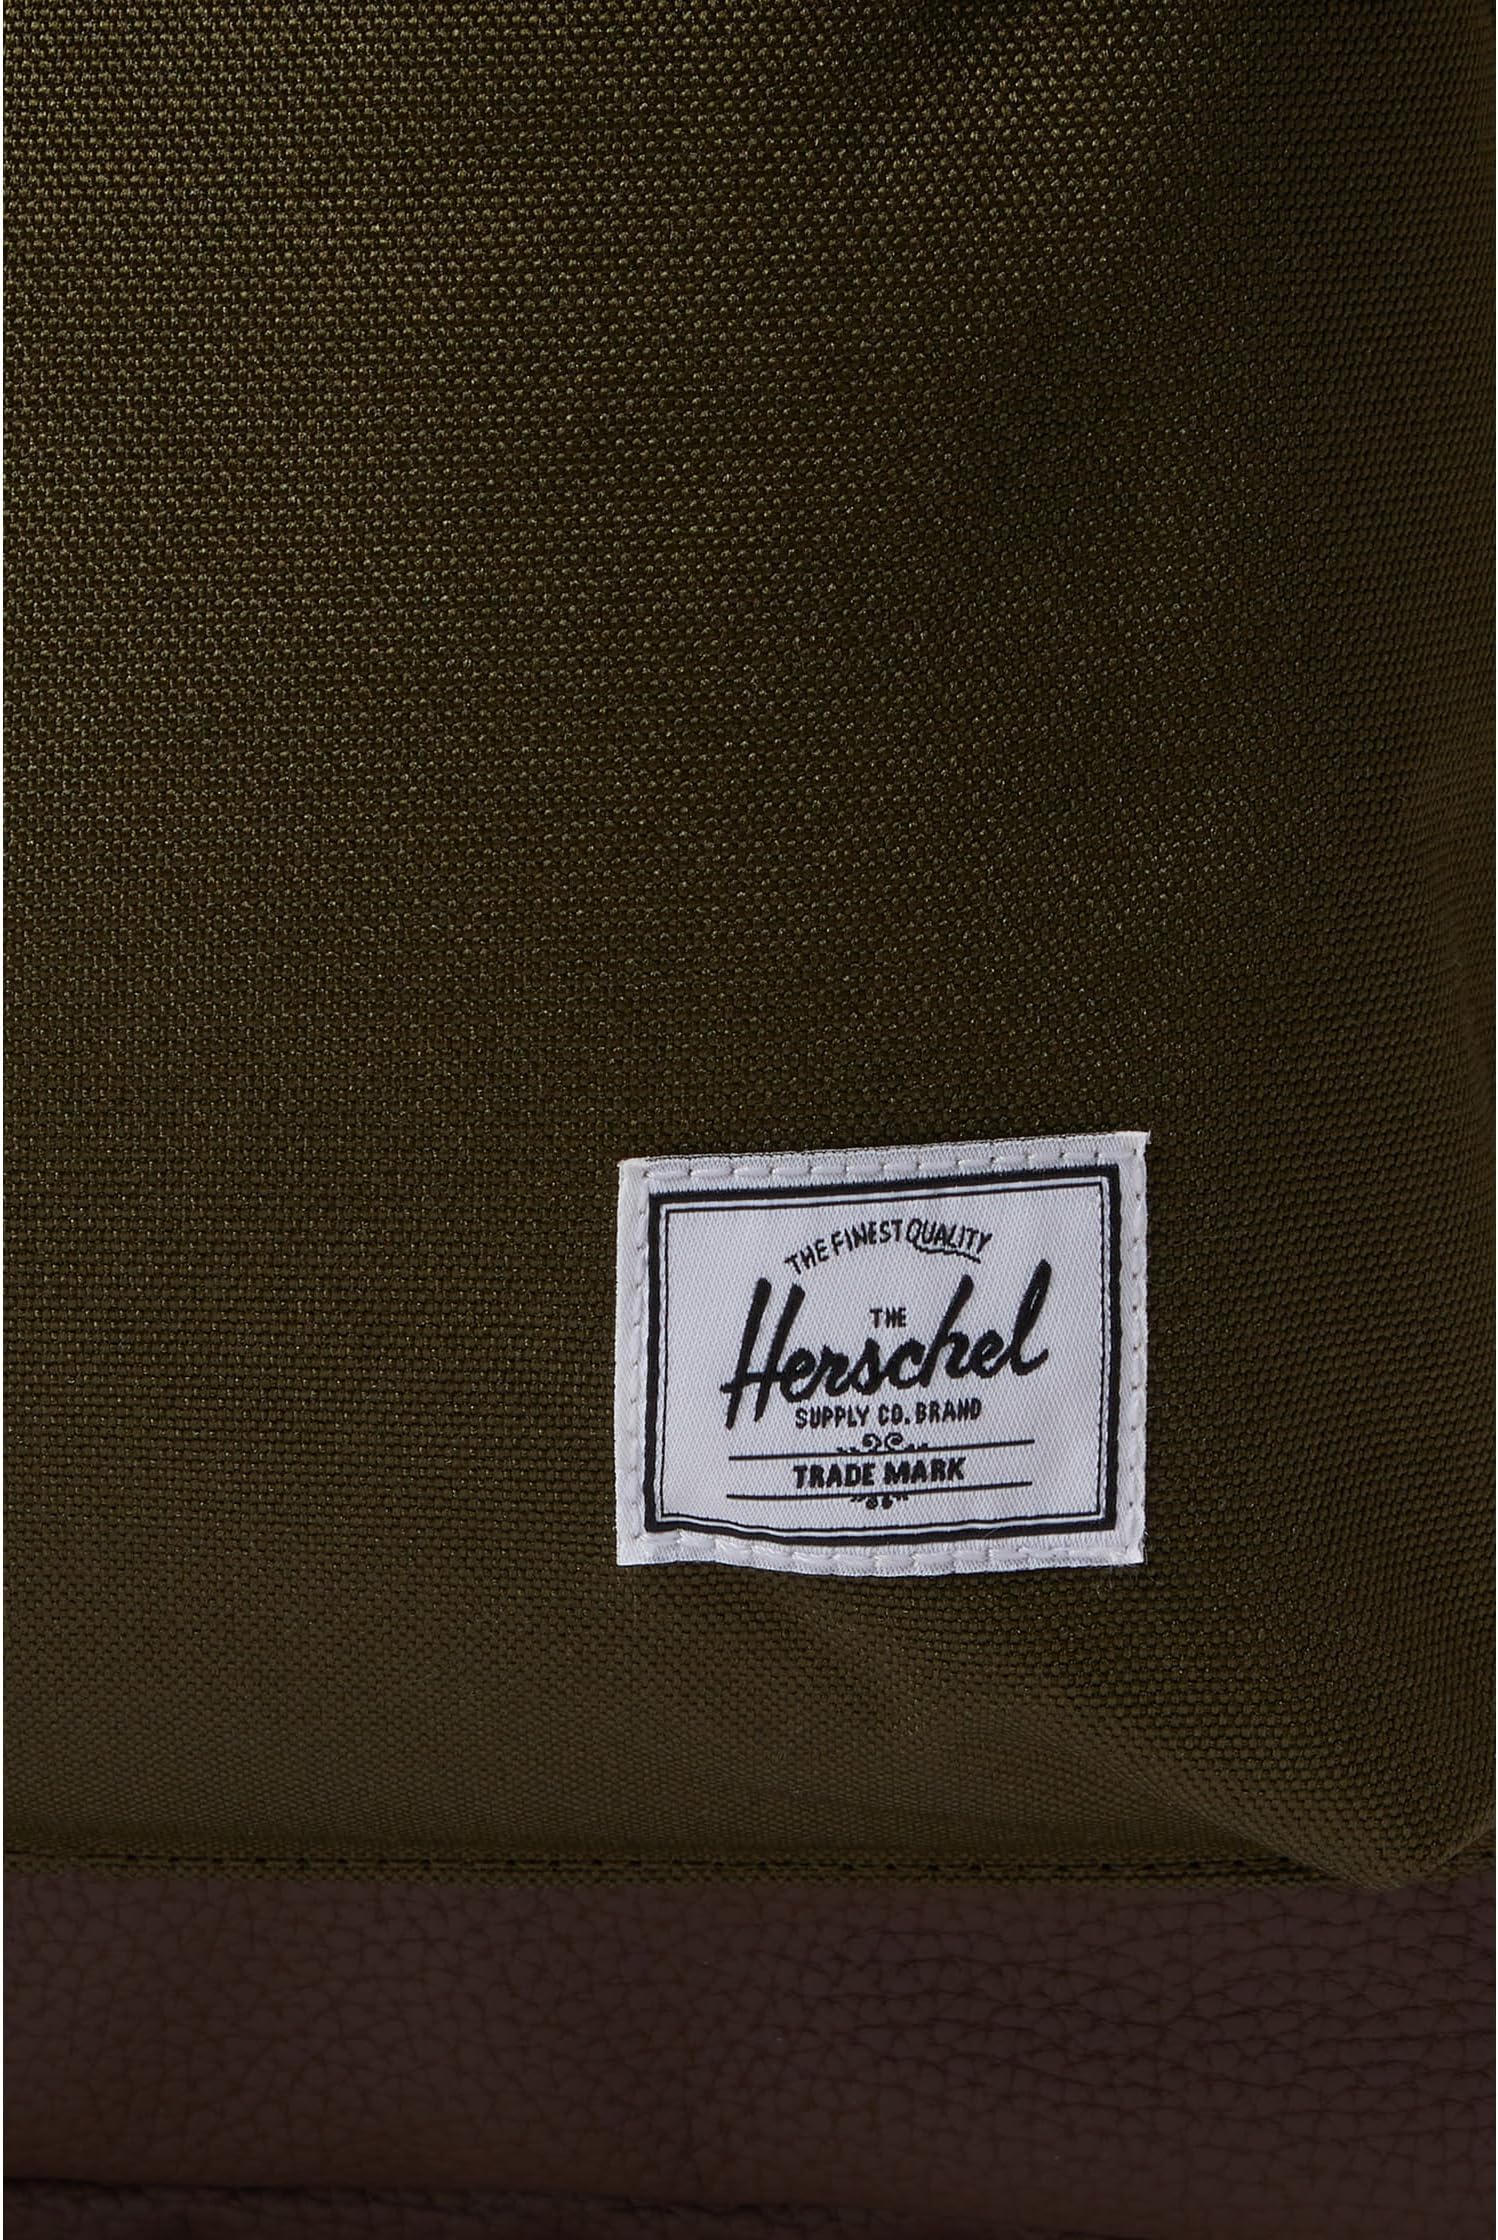 рюкзак heritage backpack herschel supply co цвет ivy green chicory coffee Рюкзак Heritage Backpack Herschel Supply Co., цвет Ivy Green/Chicory Coffee